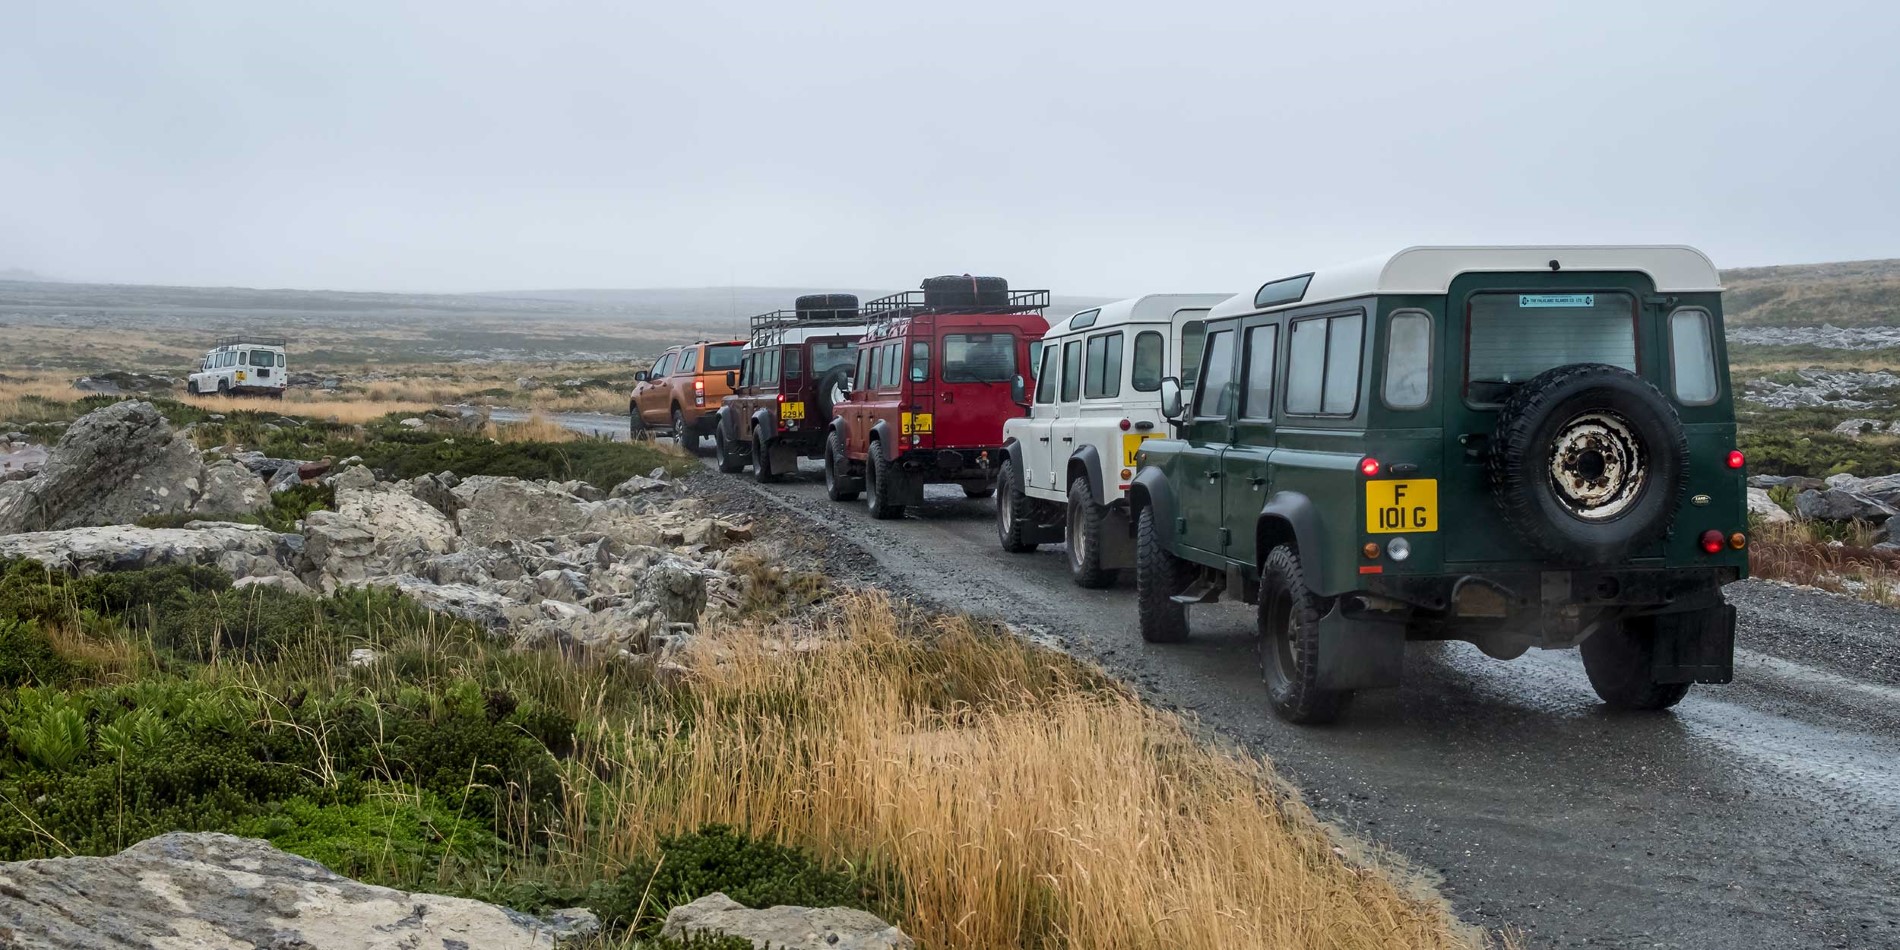 Jeep safari excursion in near Port Stanley, Falkland Islands (Islas Malvinas) 